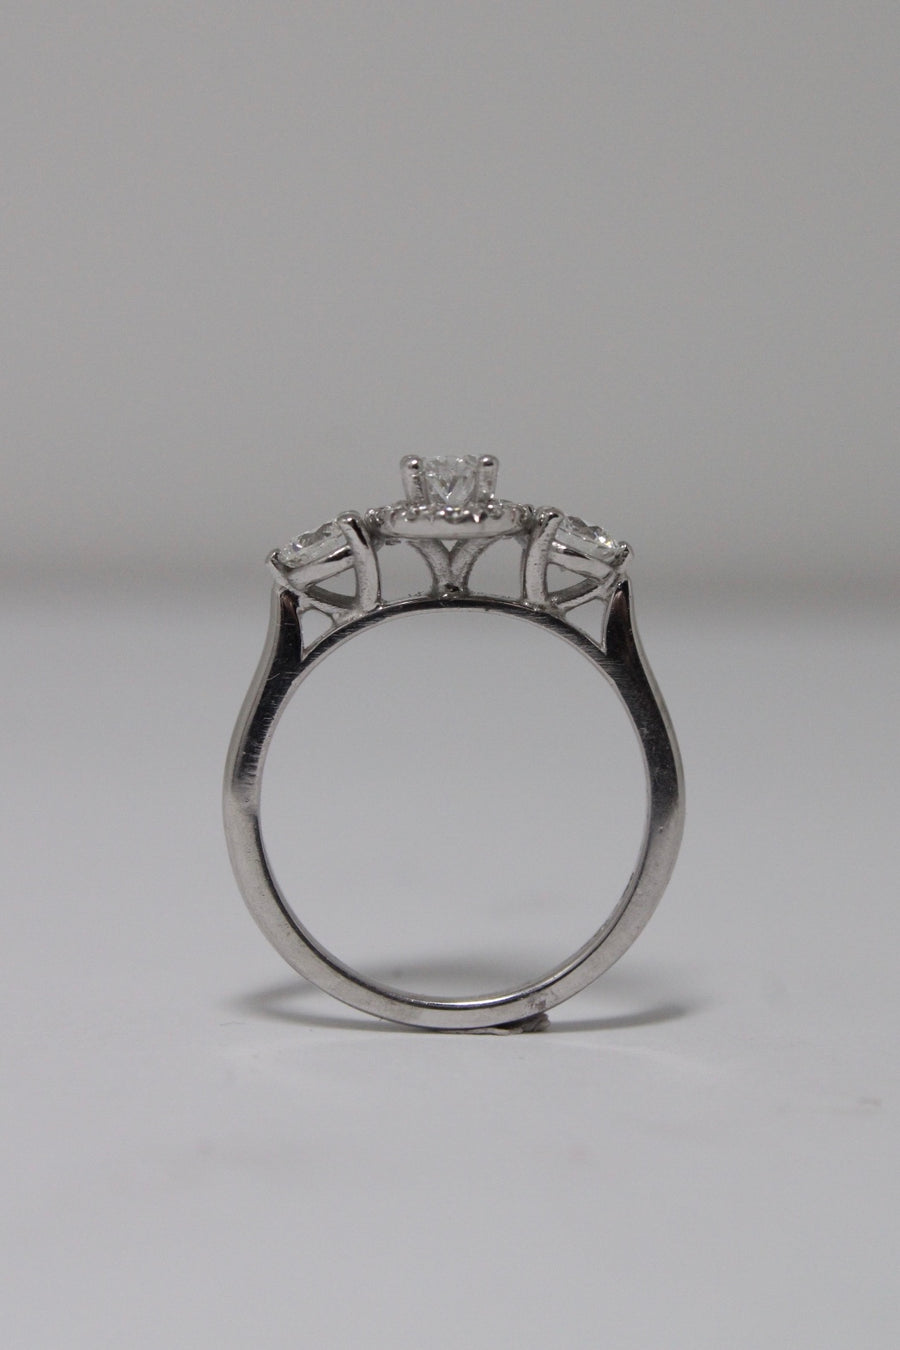 Oval Diamond Halo Ring